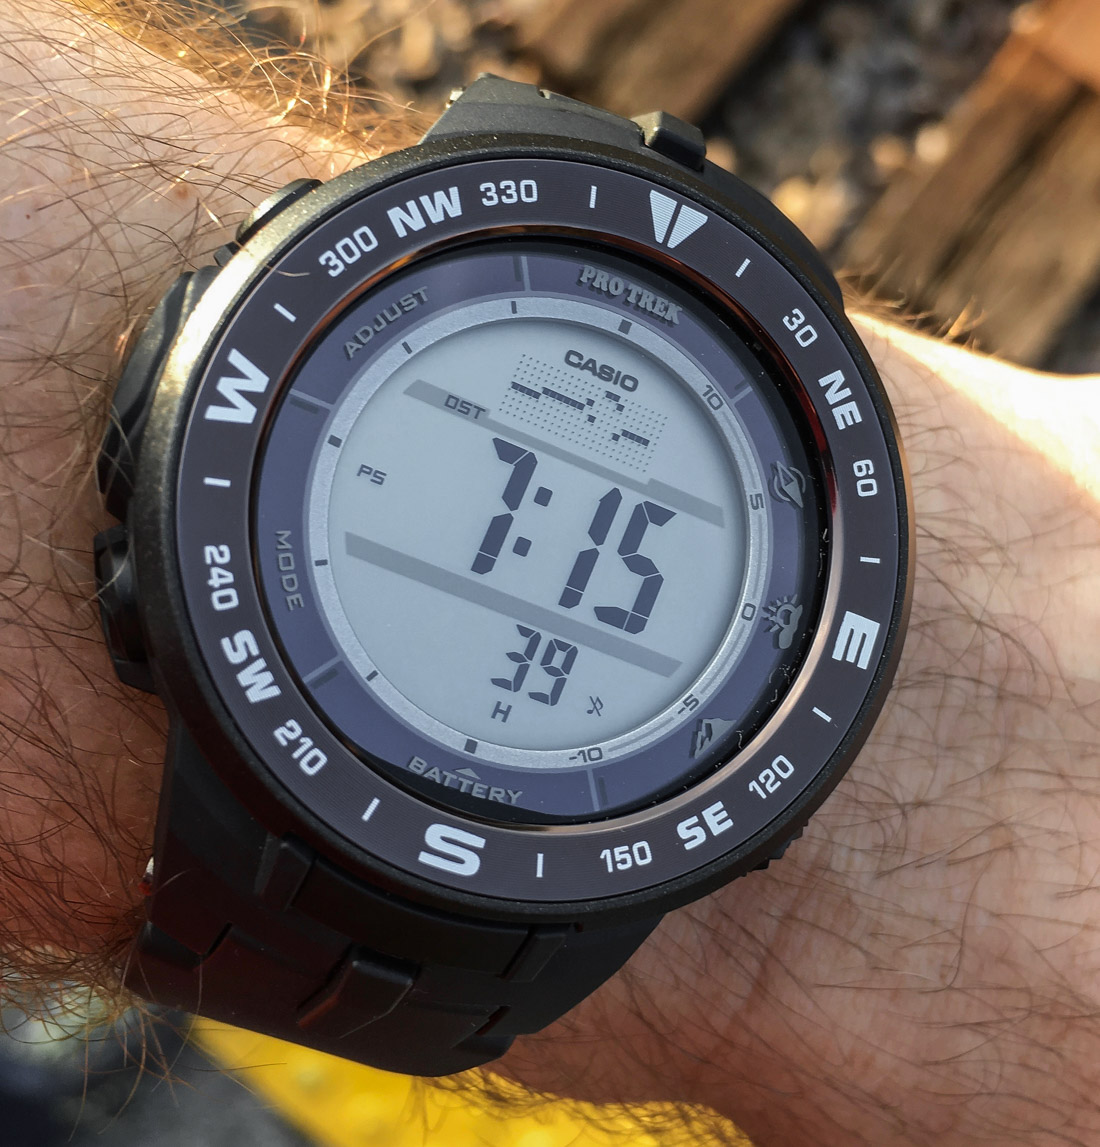 Casio ProTrek PRG330 Outdoor Smartwatch Review | aBlogtoWatch